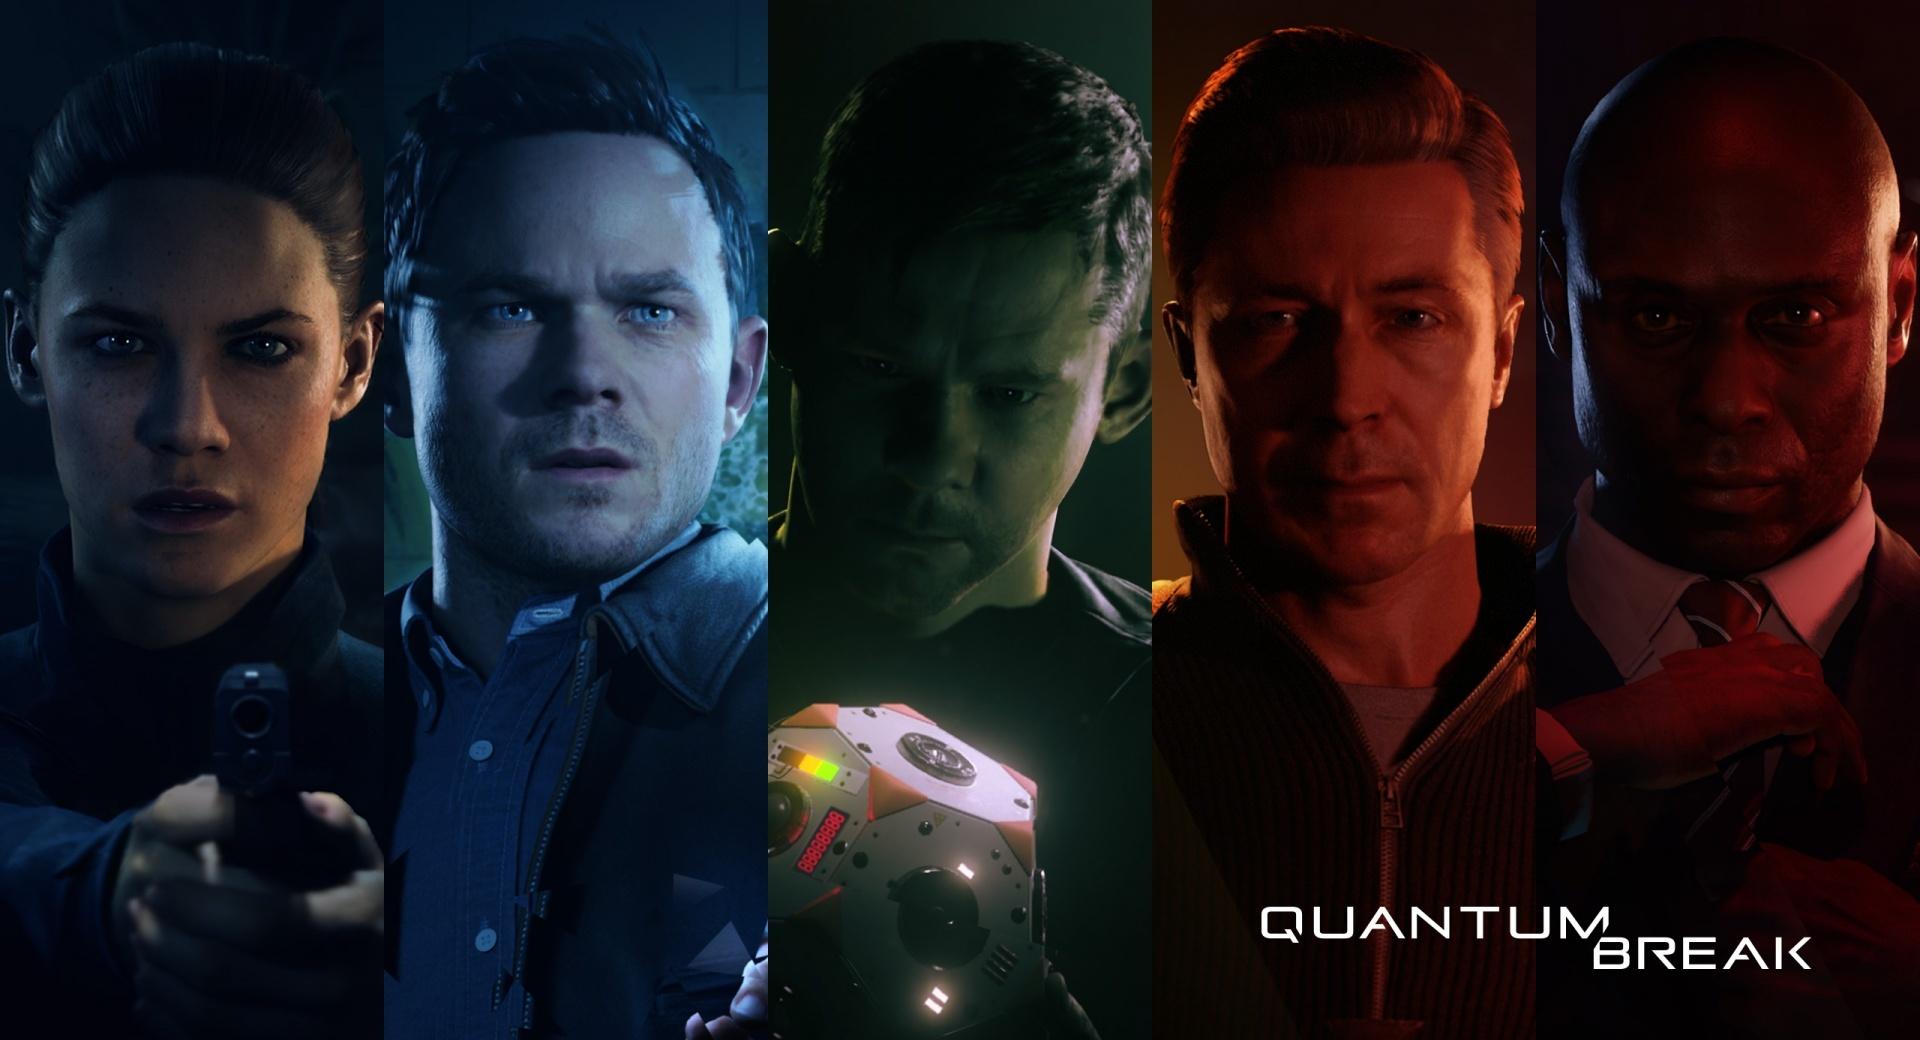 Quantum Break Cast at 1152 x 864 size wallpapers HD quality